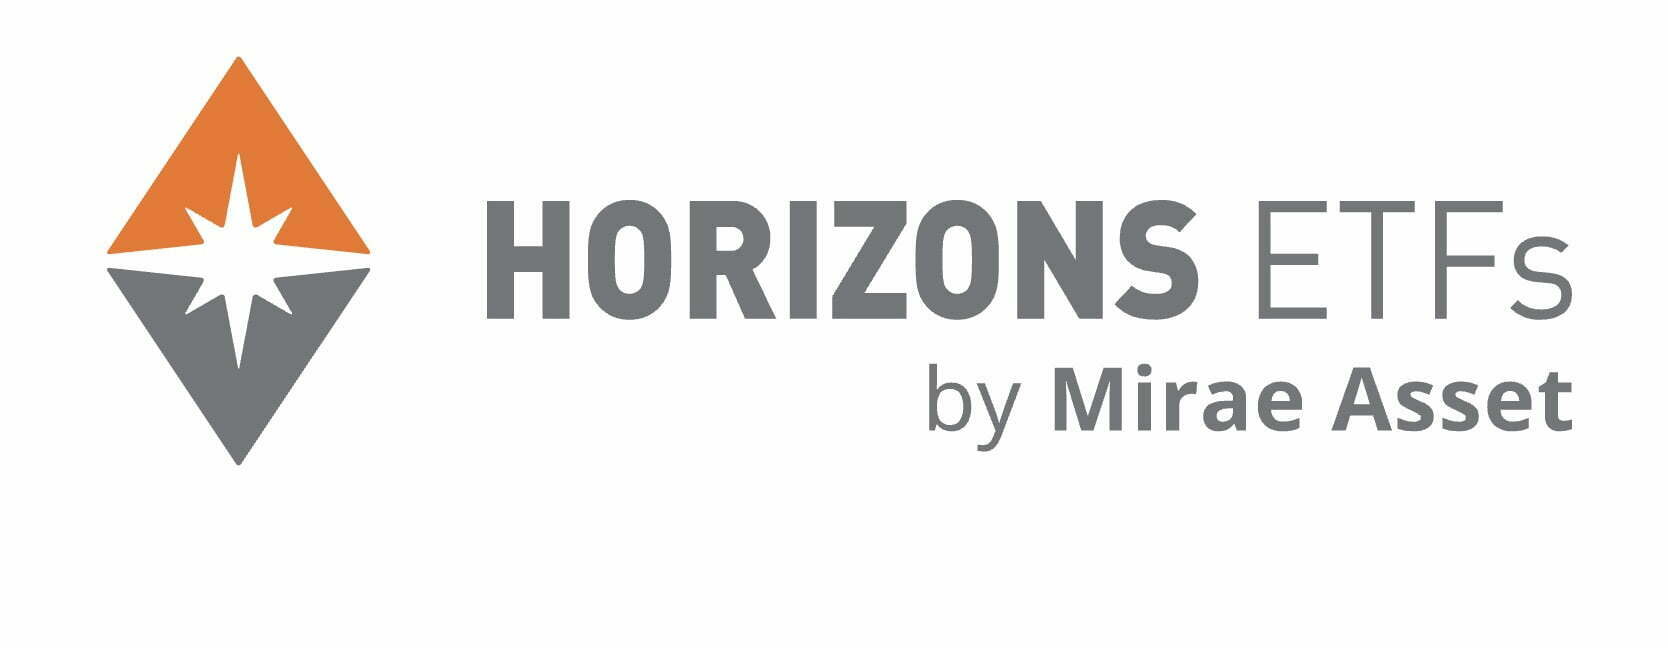 Horizons ETFs by Mirae Assets Logo